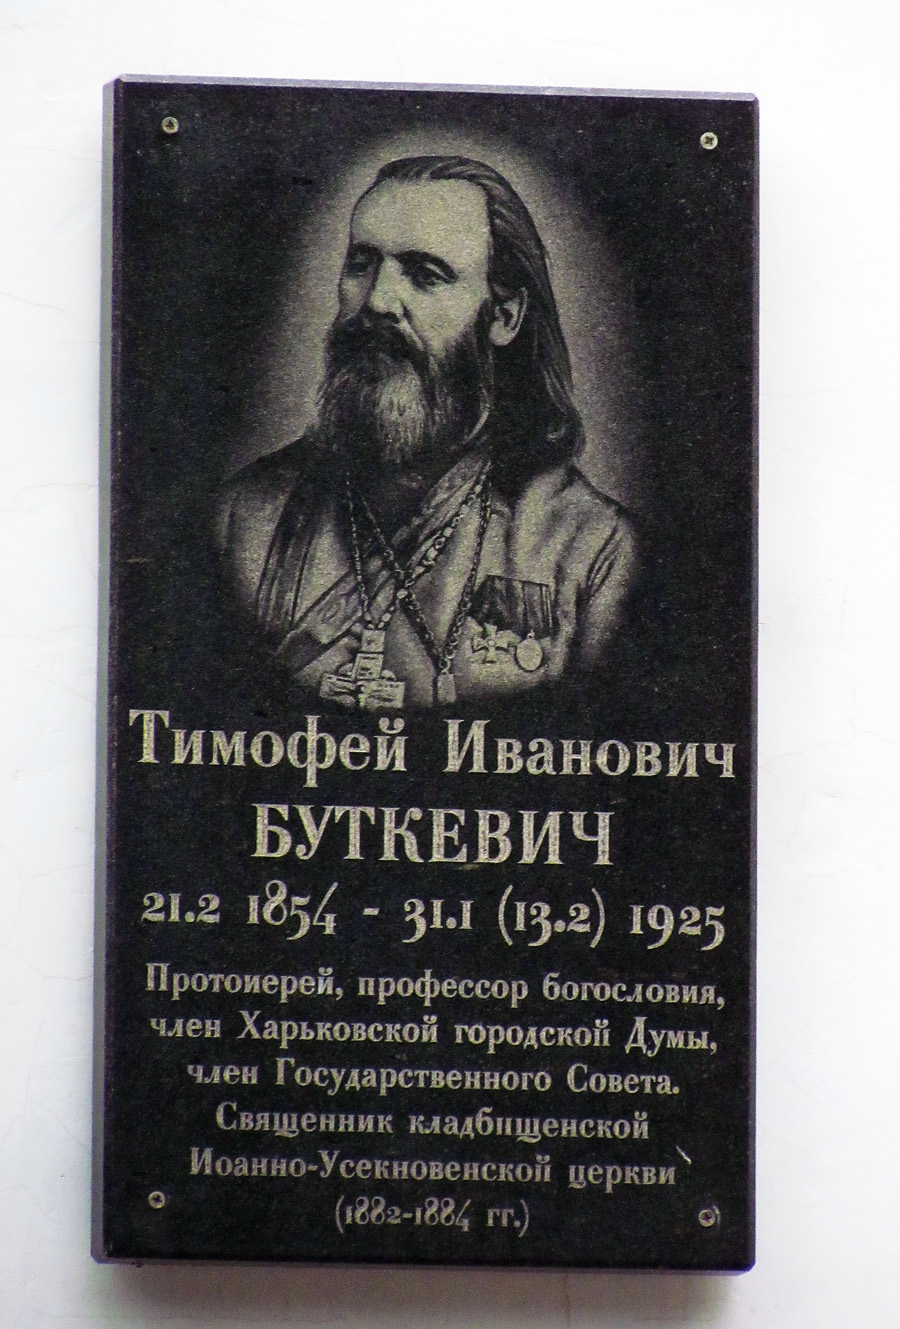 Charkow, Улица Алчевских, 50. Charkow — Memorial plaques